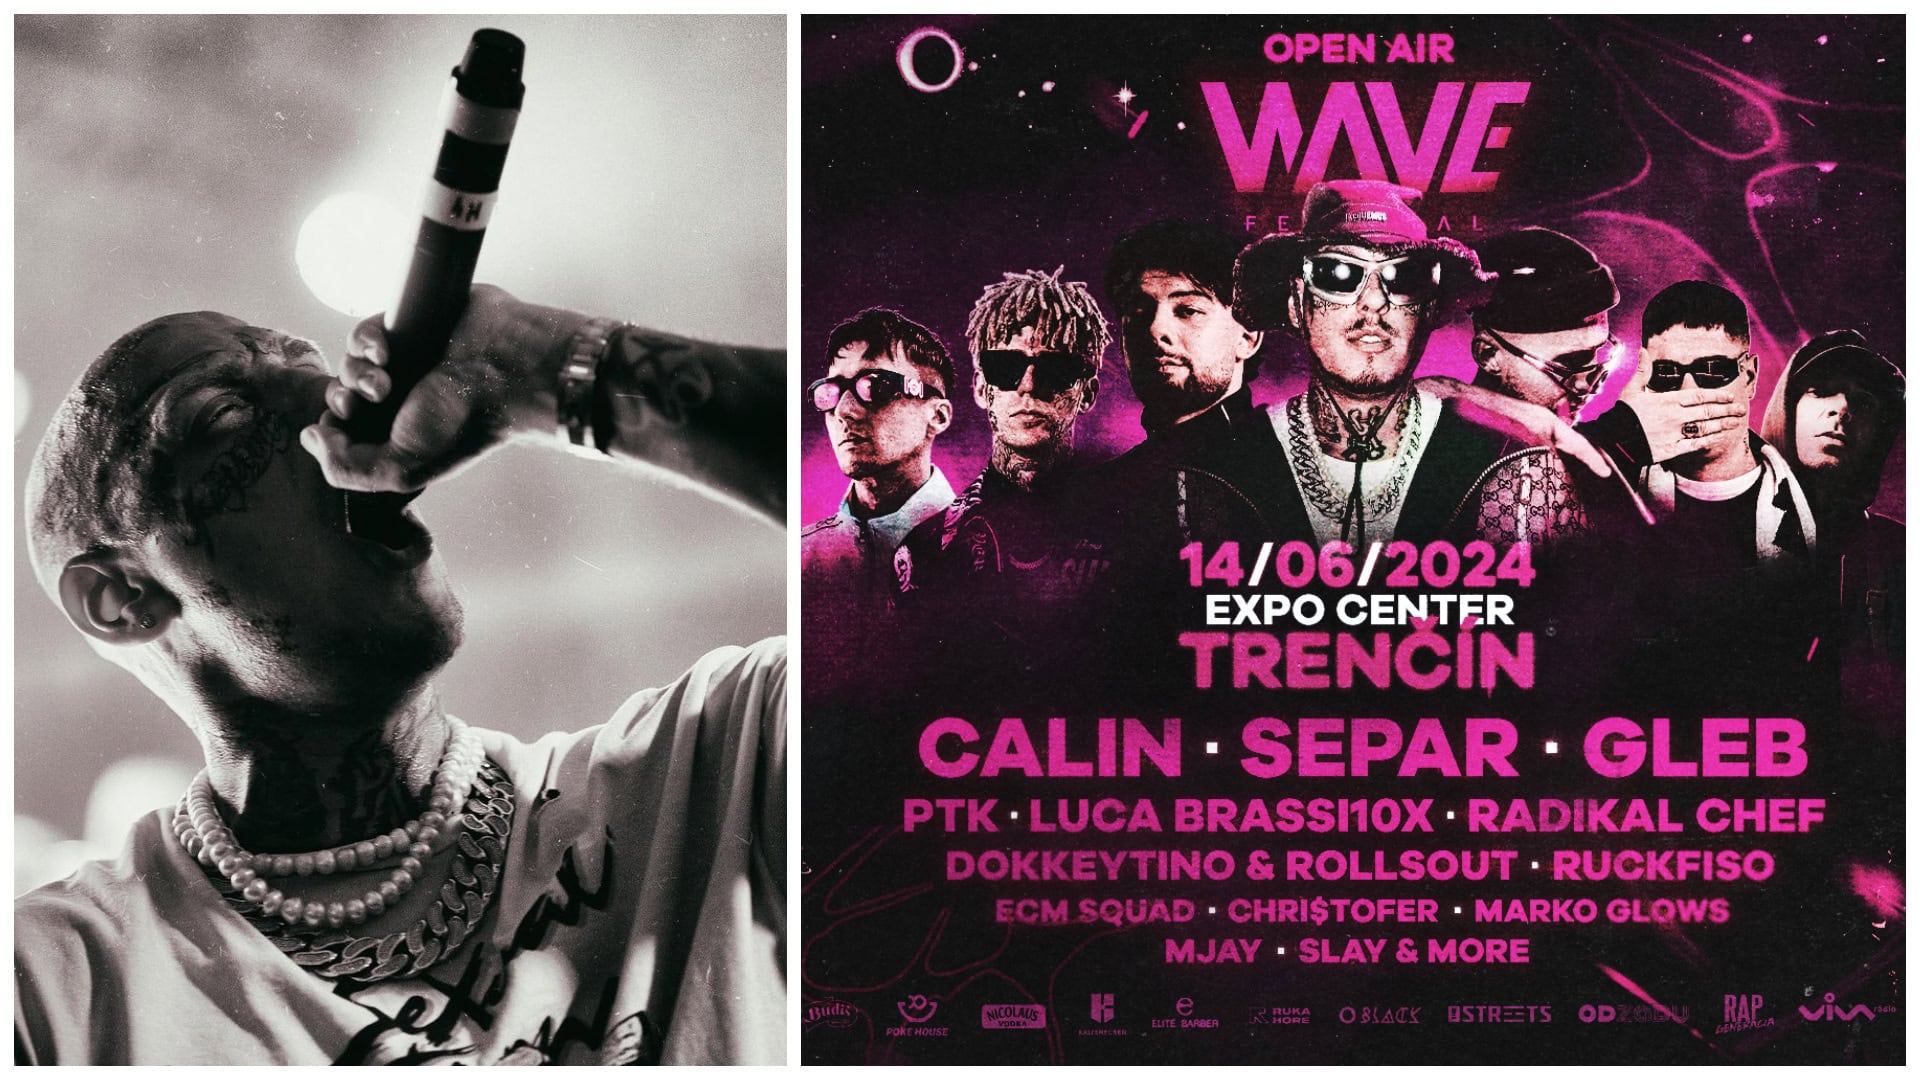 Wave festival